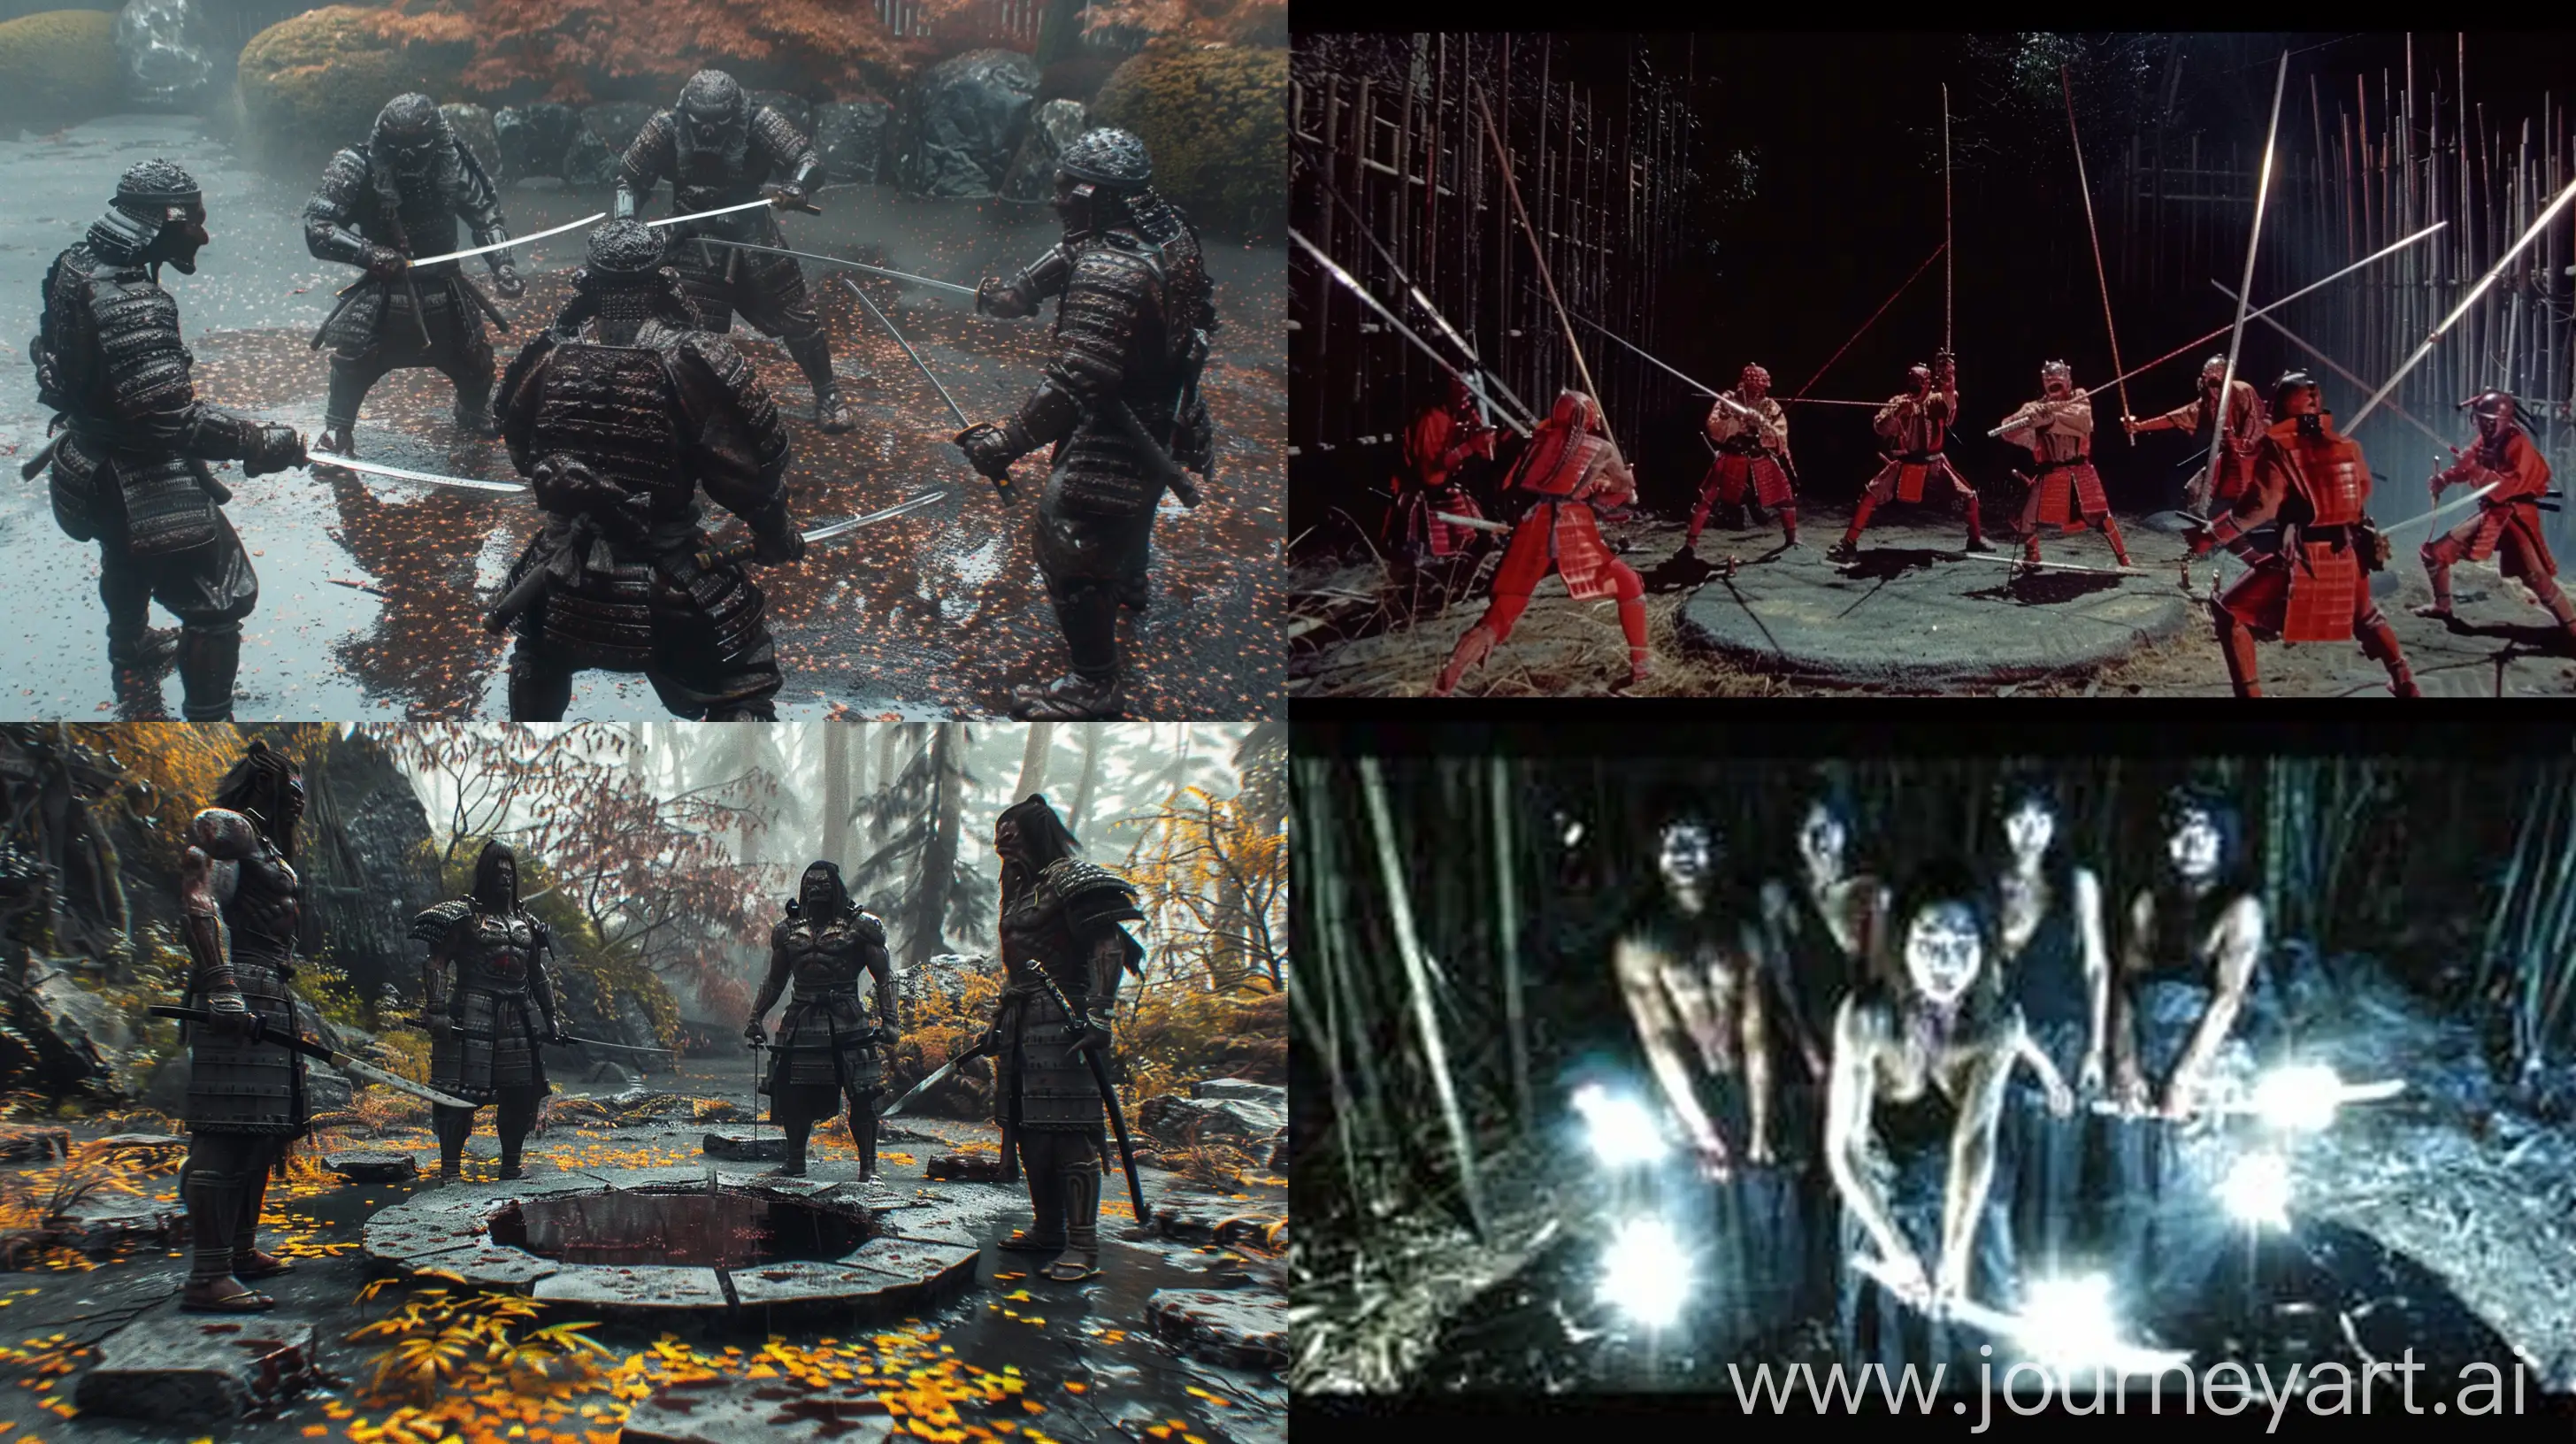 Bloody-Samurai-Warriors-Circle-of-Death-in-Japanese-Horror-Film